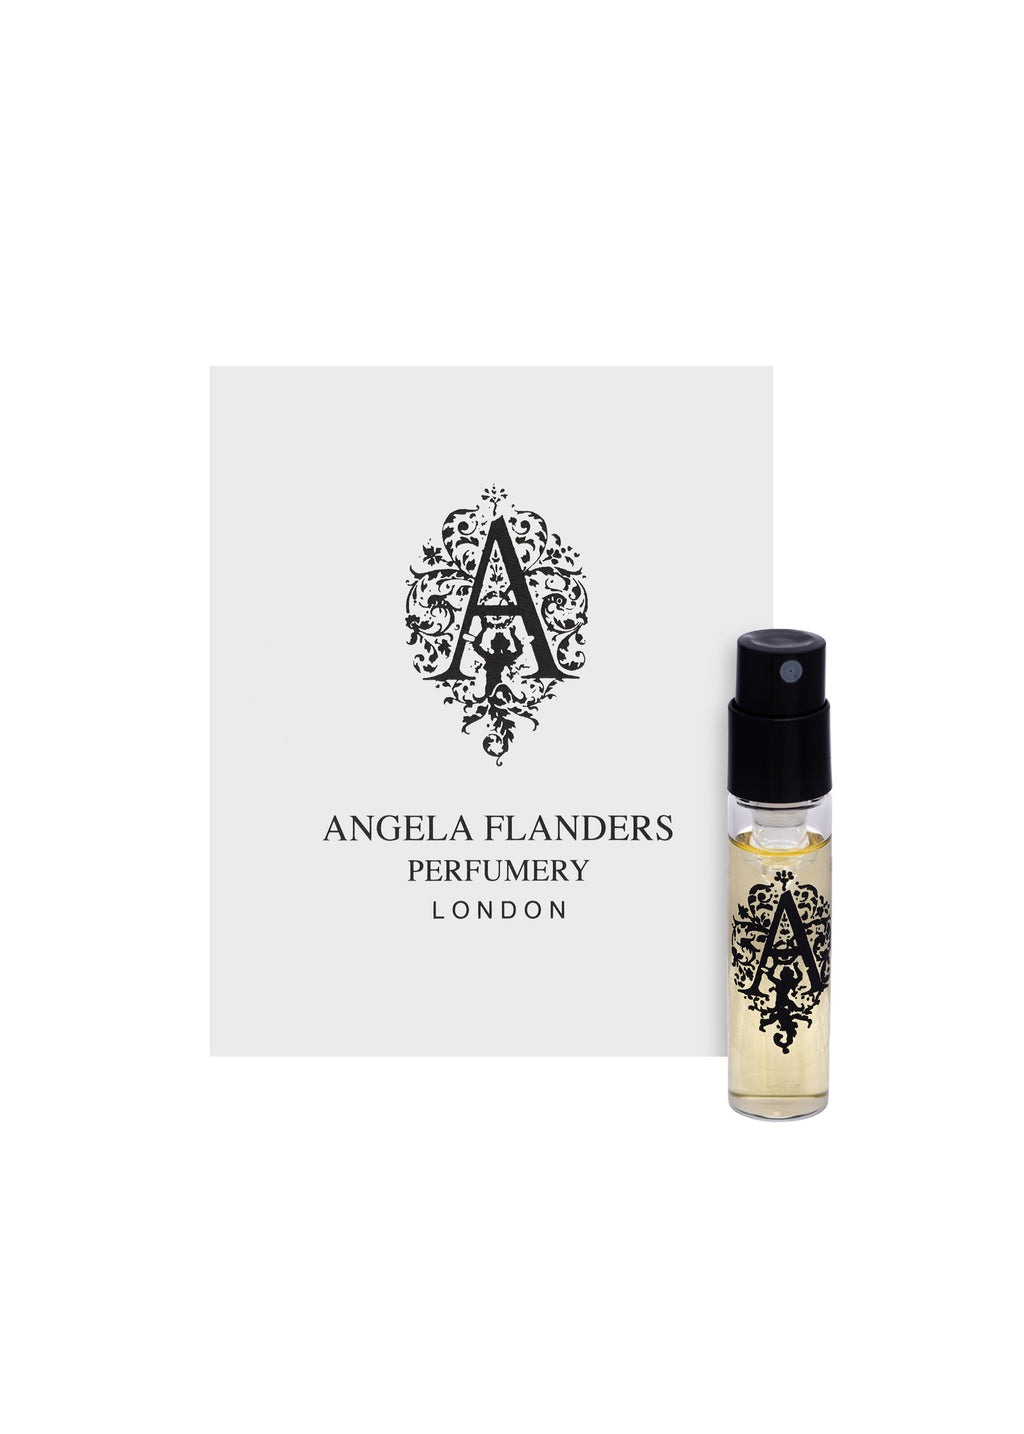 Angela Flanders Ottoman Eau de Parfum Sample